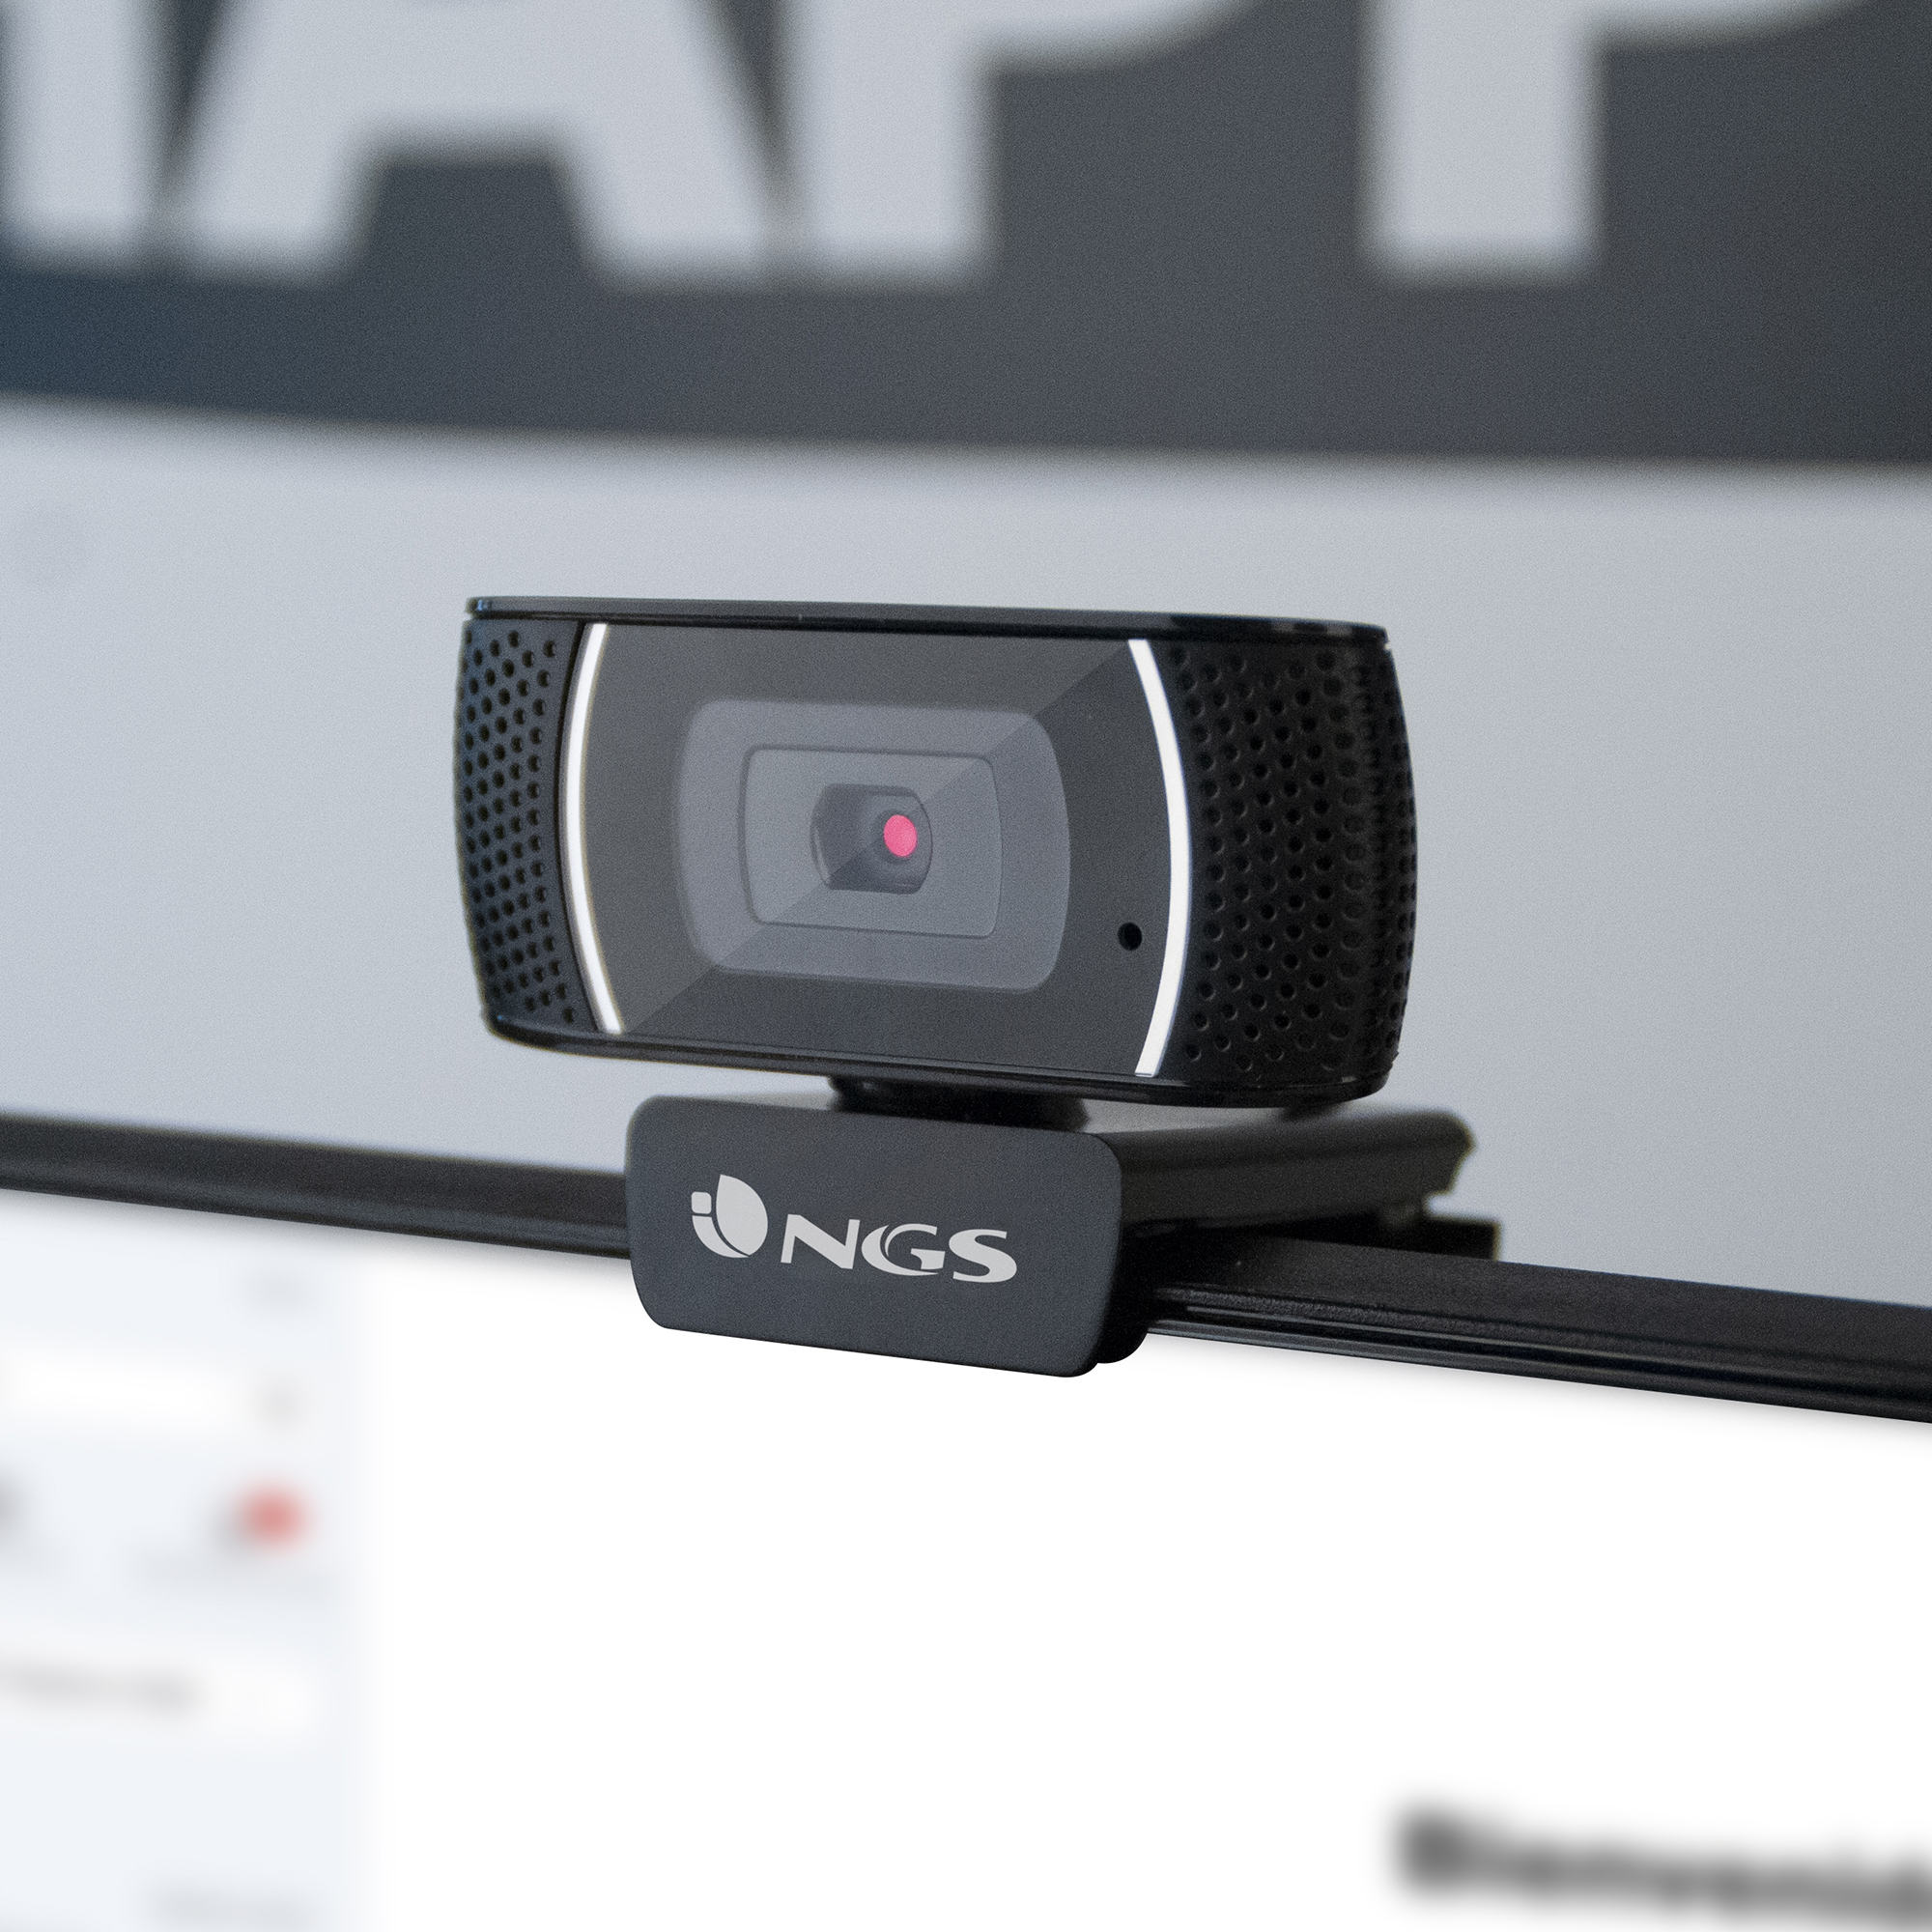 Webcam NGS XPRESSCAM1080